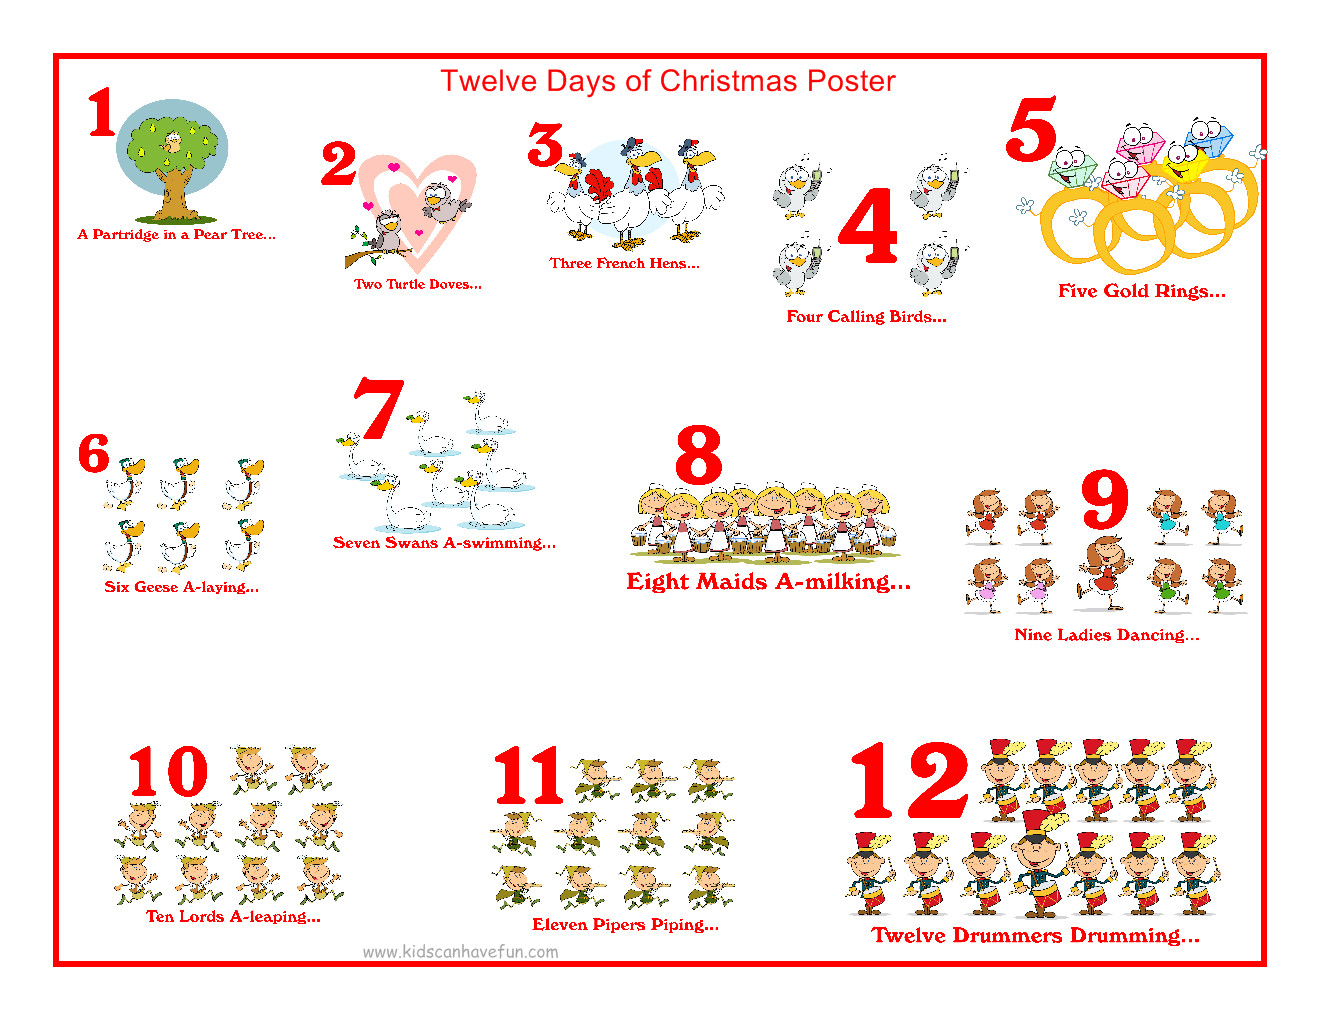 12 Days Of Christmas Gift Ideas For Kids
 Kid Konnection Twelve Days of Christmas